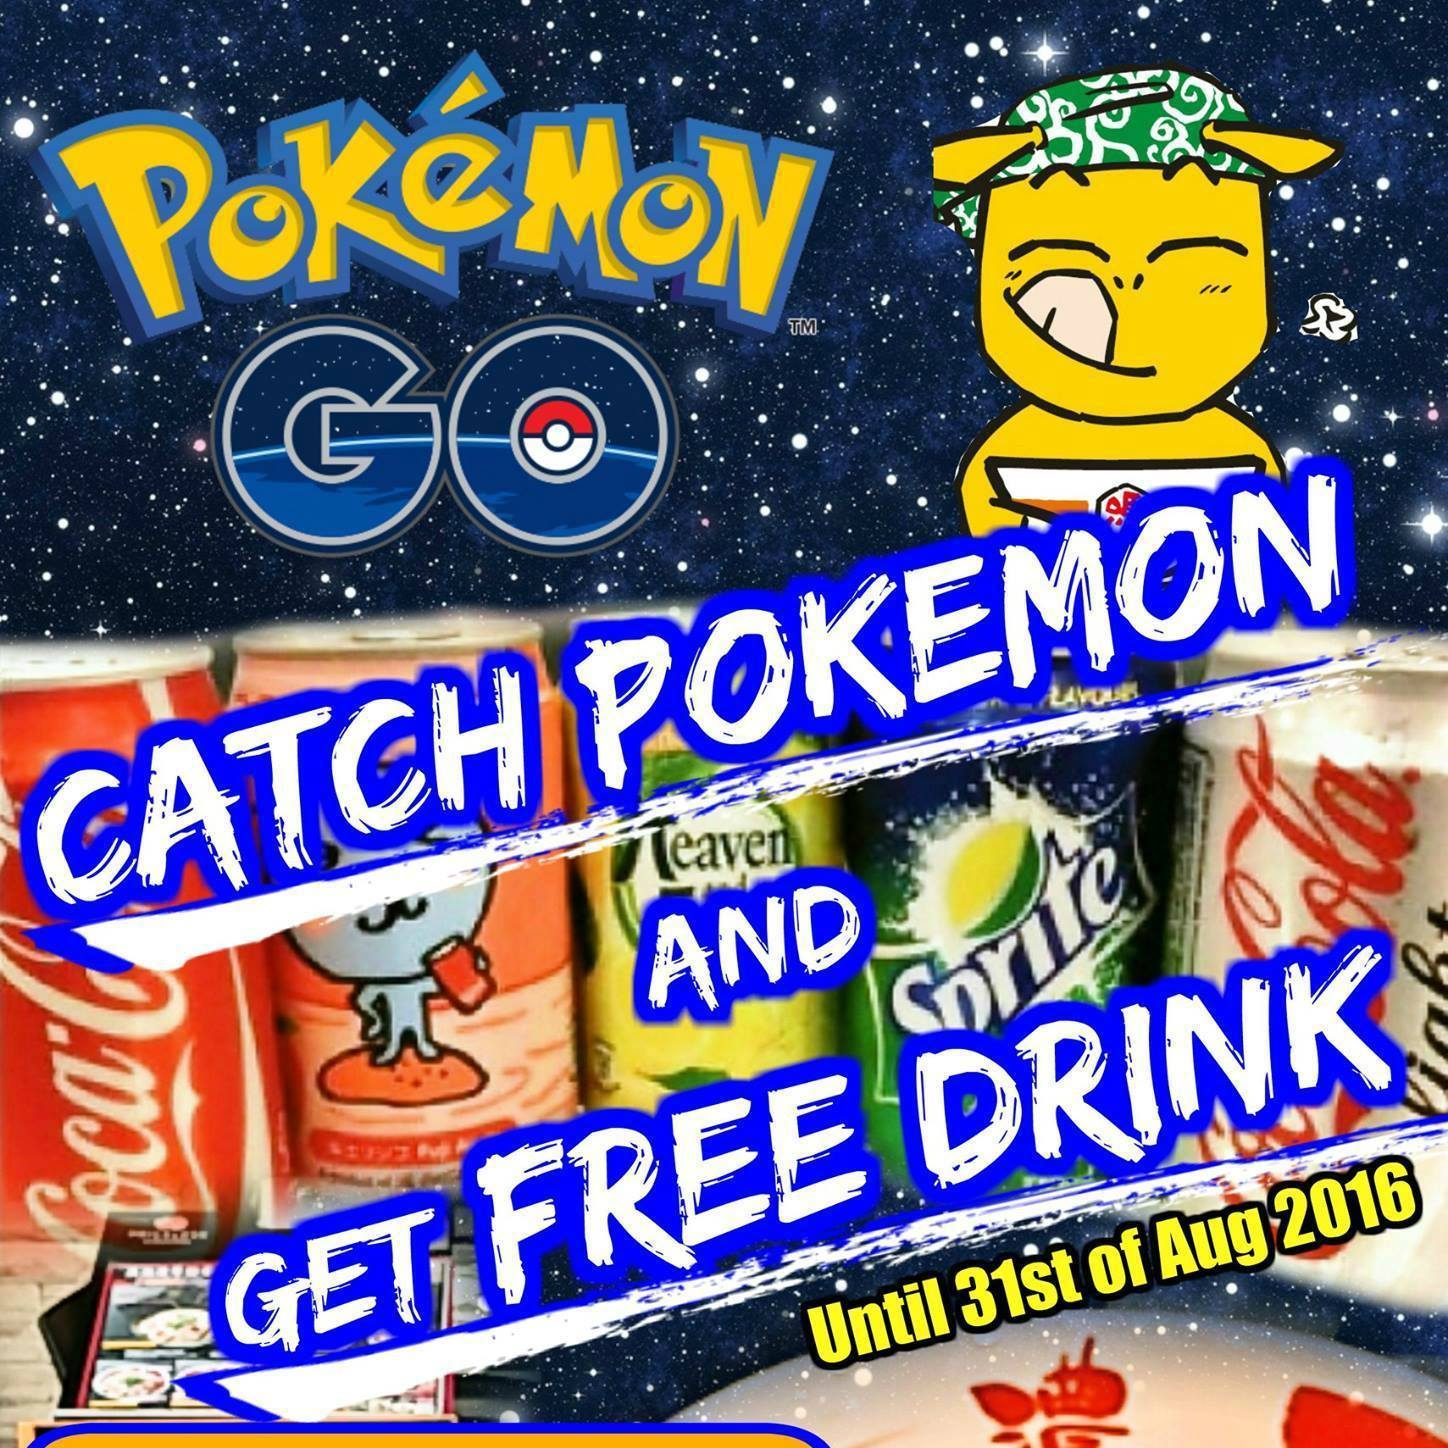 Bariuma Singapore Pokemon GO Catch Pokemon & Get FREE Drink ends 31 Aug 2016